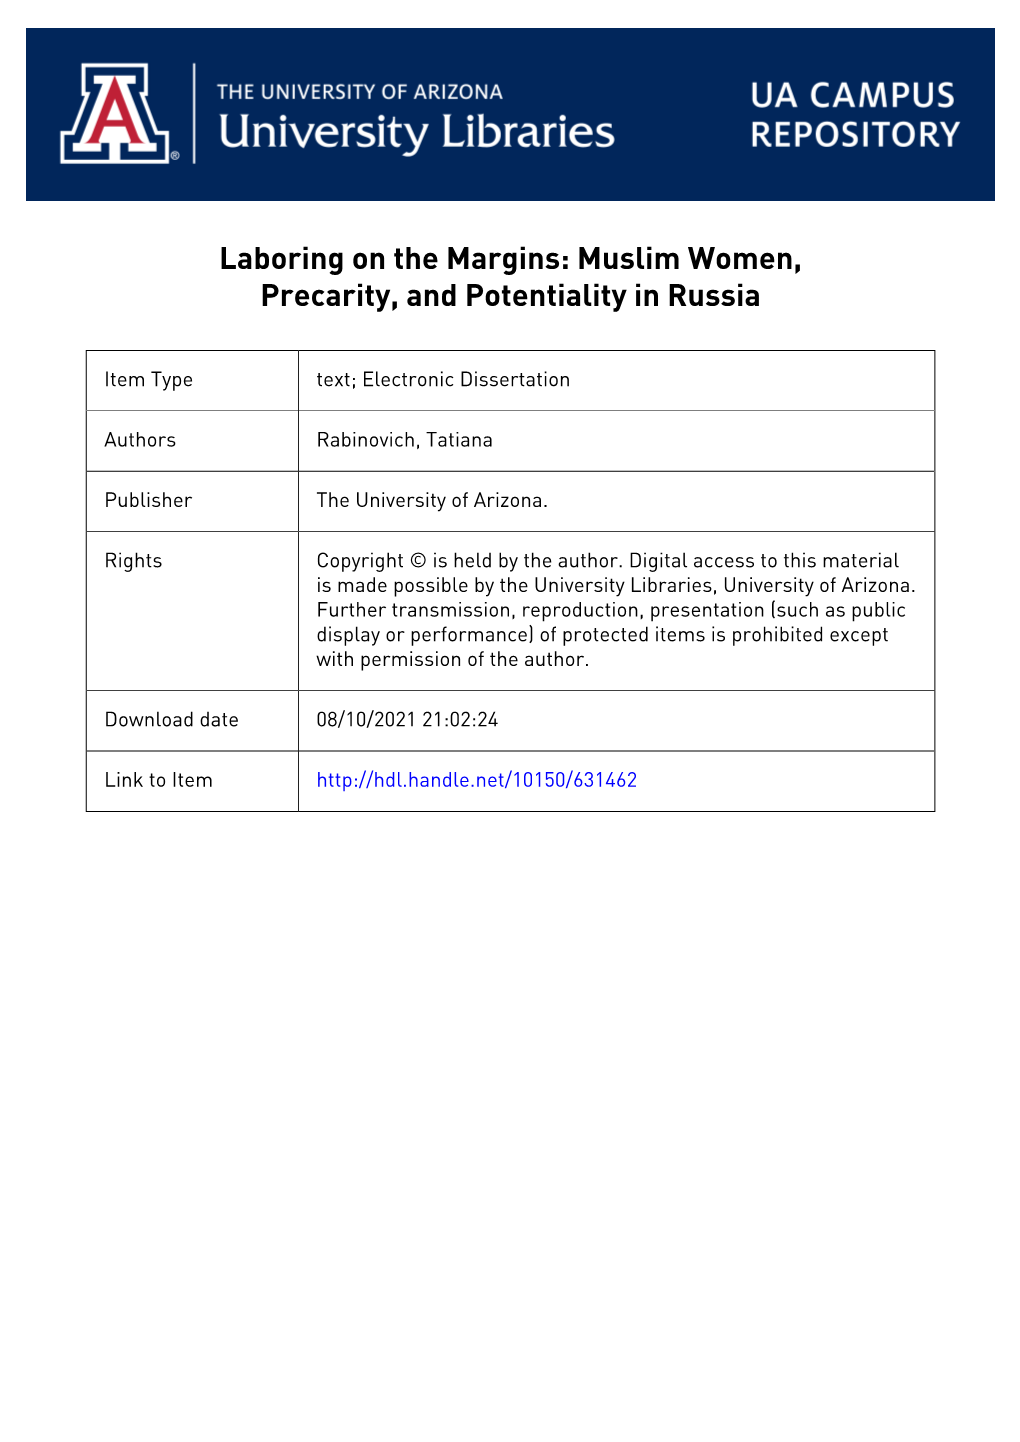 Muslim Women, Precarity, and Potentiality in Russia